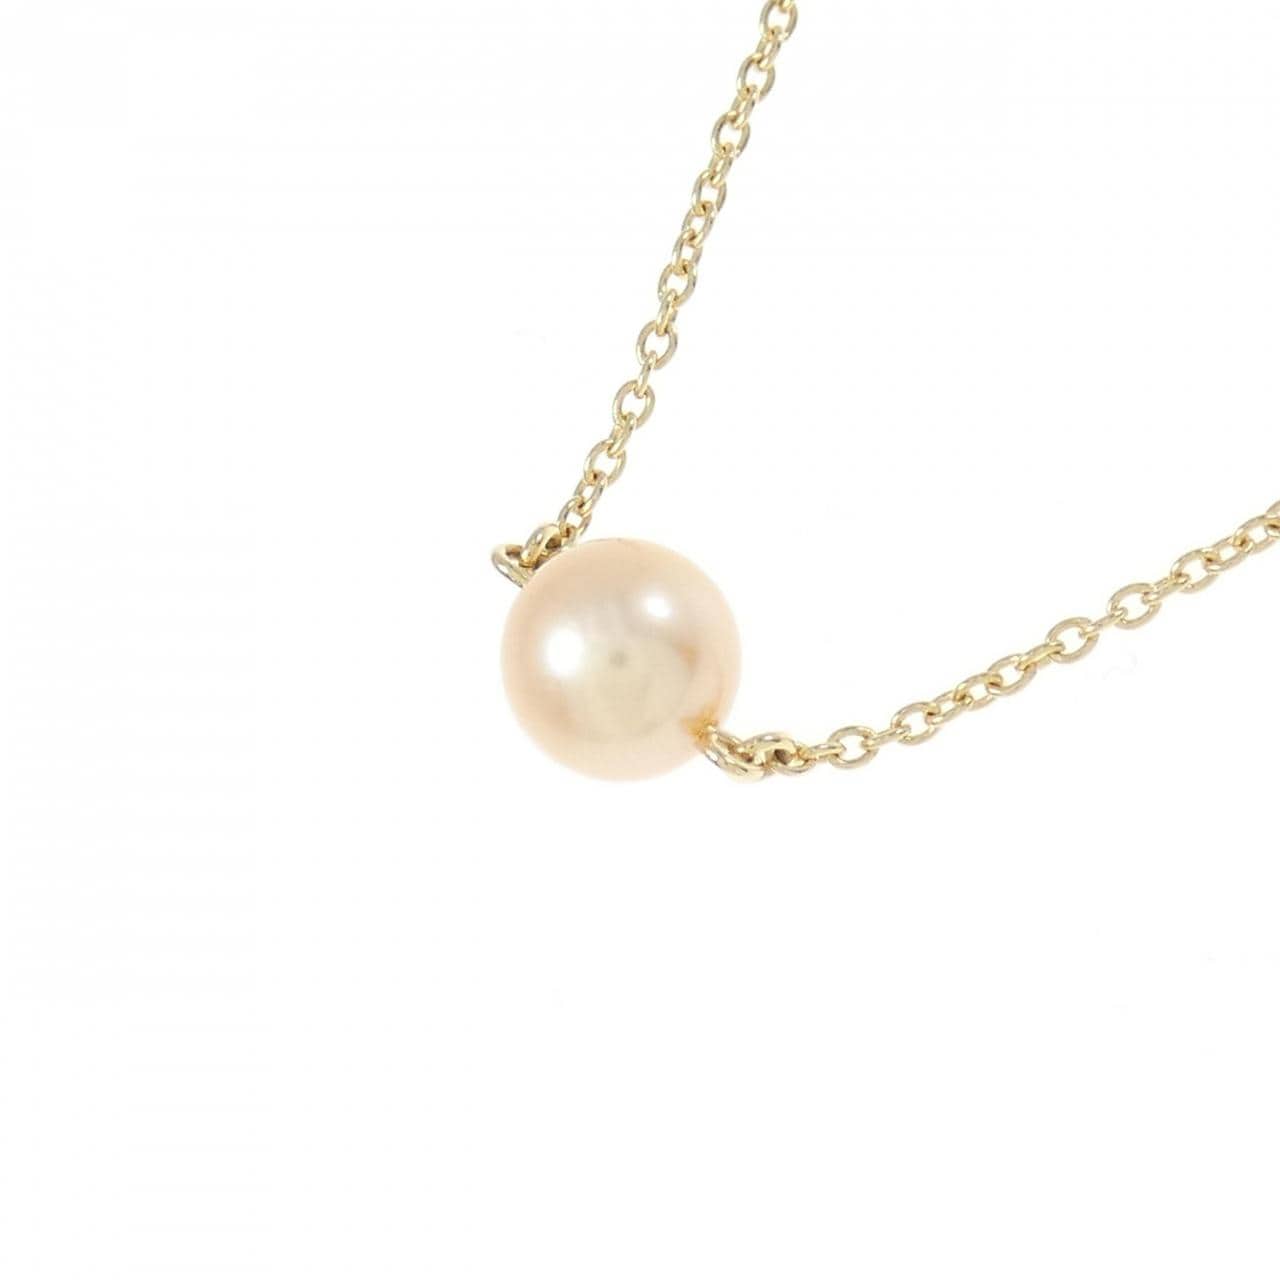 Tasaki freshwater pearl necklace 7.1mm